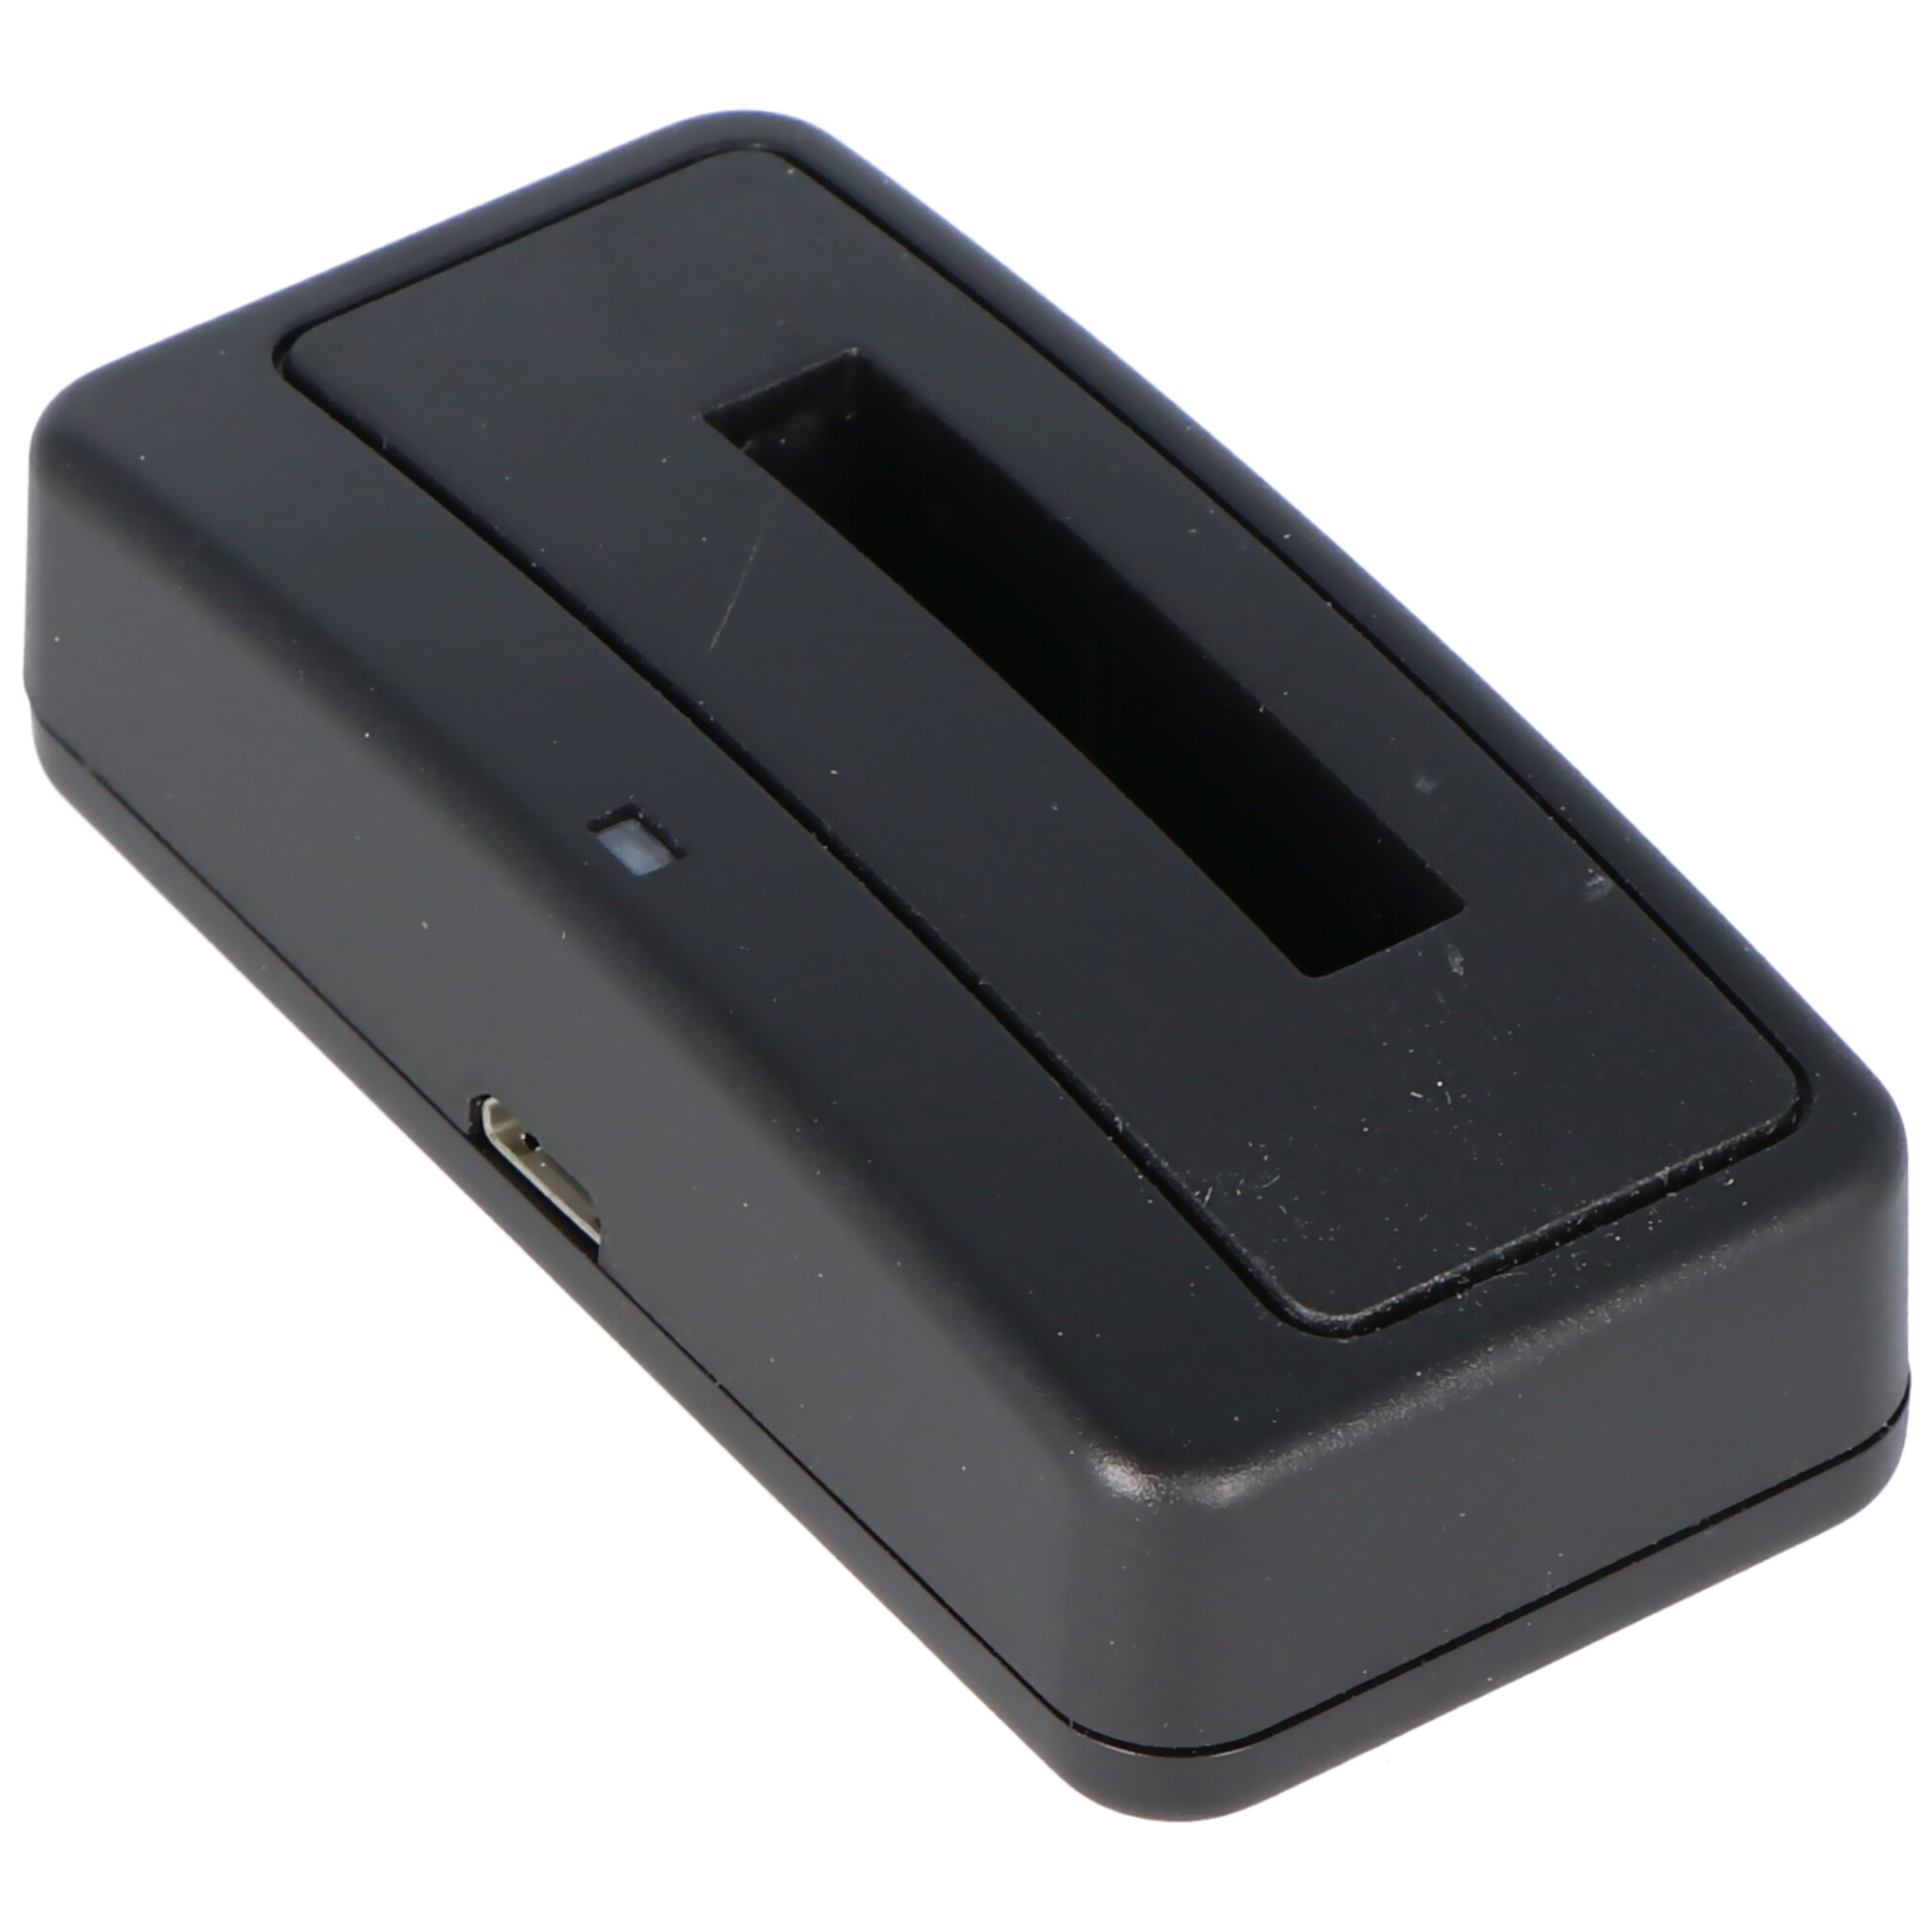 Akkuladegerät für Nokia BL-5C, BL-5B Akku zum externen laden inklusive MicroUSB Kabel